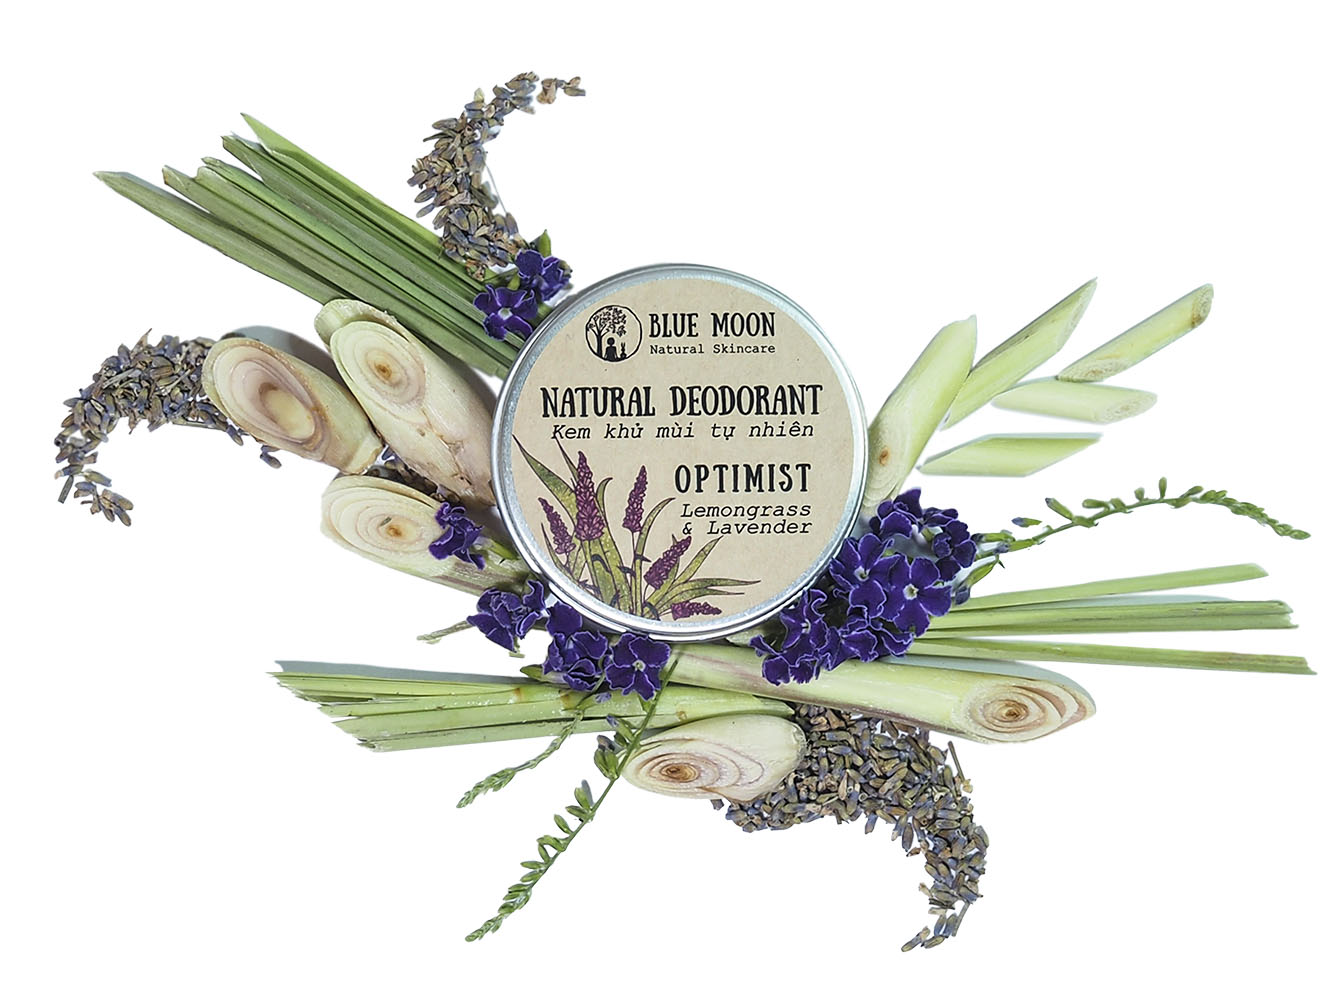 Lemongrass Lavender Natural Deodorant - Blue Moon Natural Skincare